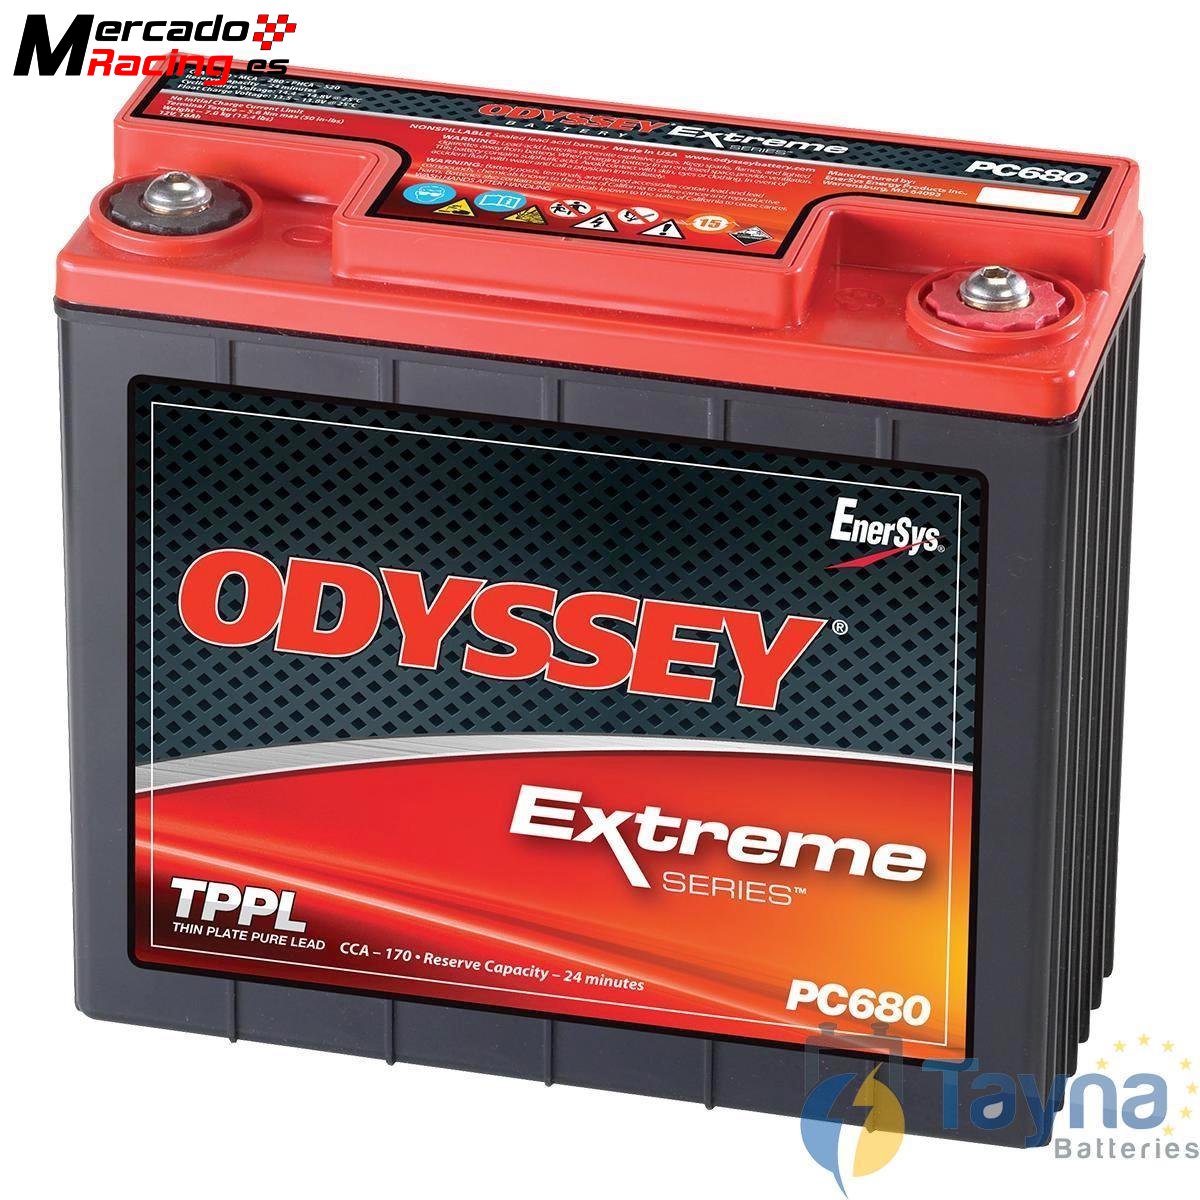 Se vende bateria odyssey pc680 como nueva